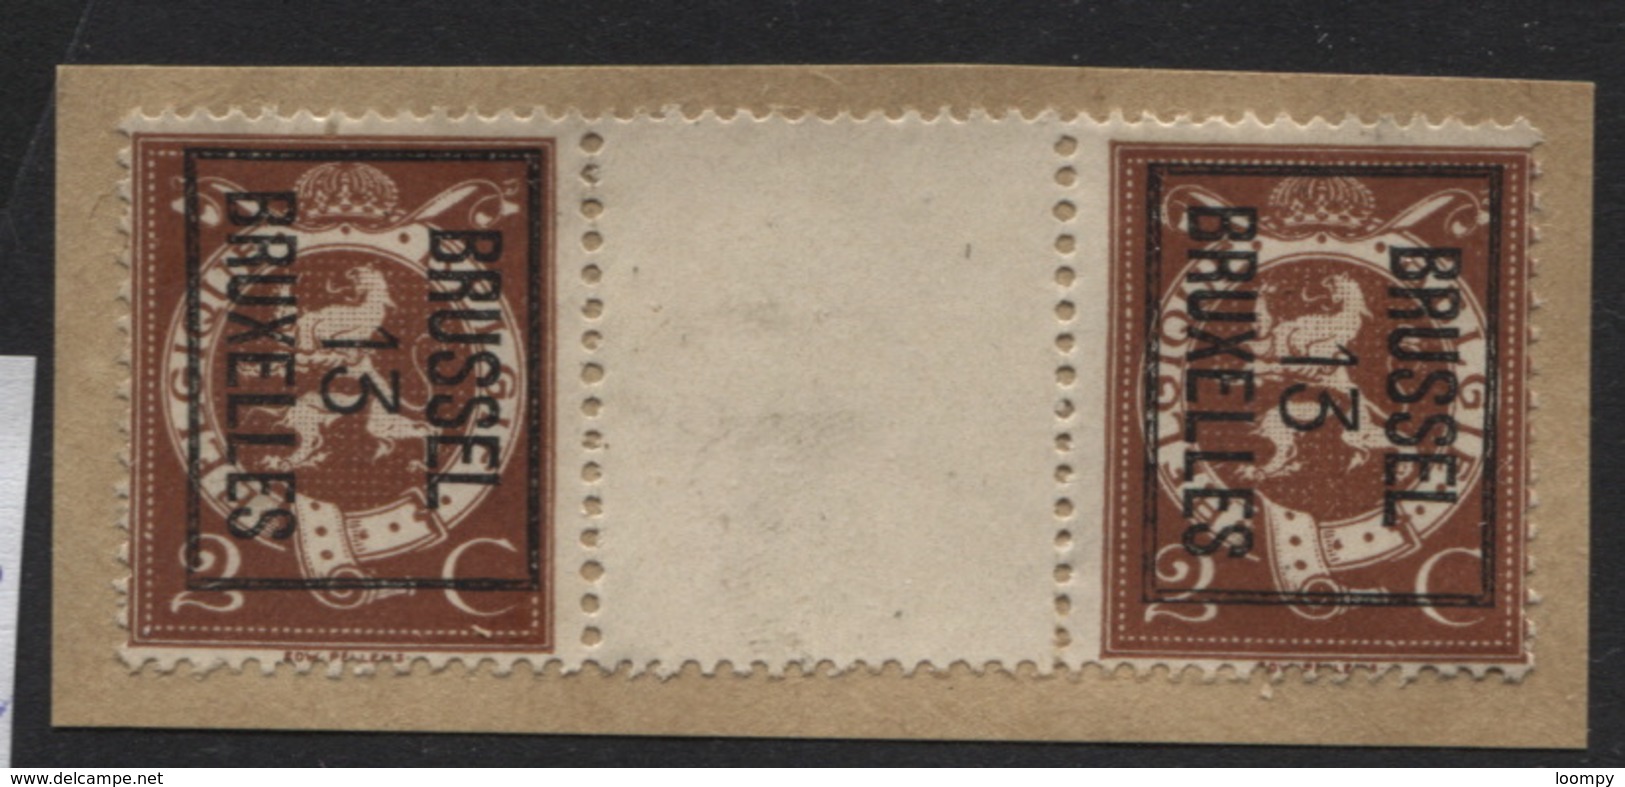 PREOS Typo - BRUSSEL 1913 BRUXELLES Interpanneaux (position B). Cat 41 Cote 100x2 - Typografisch 1912-14 (Cijfer-leeuw)